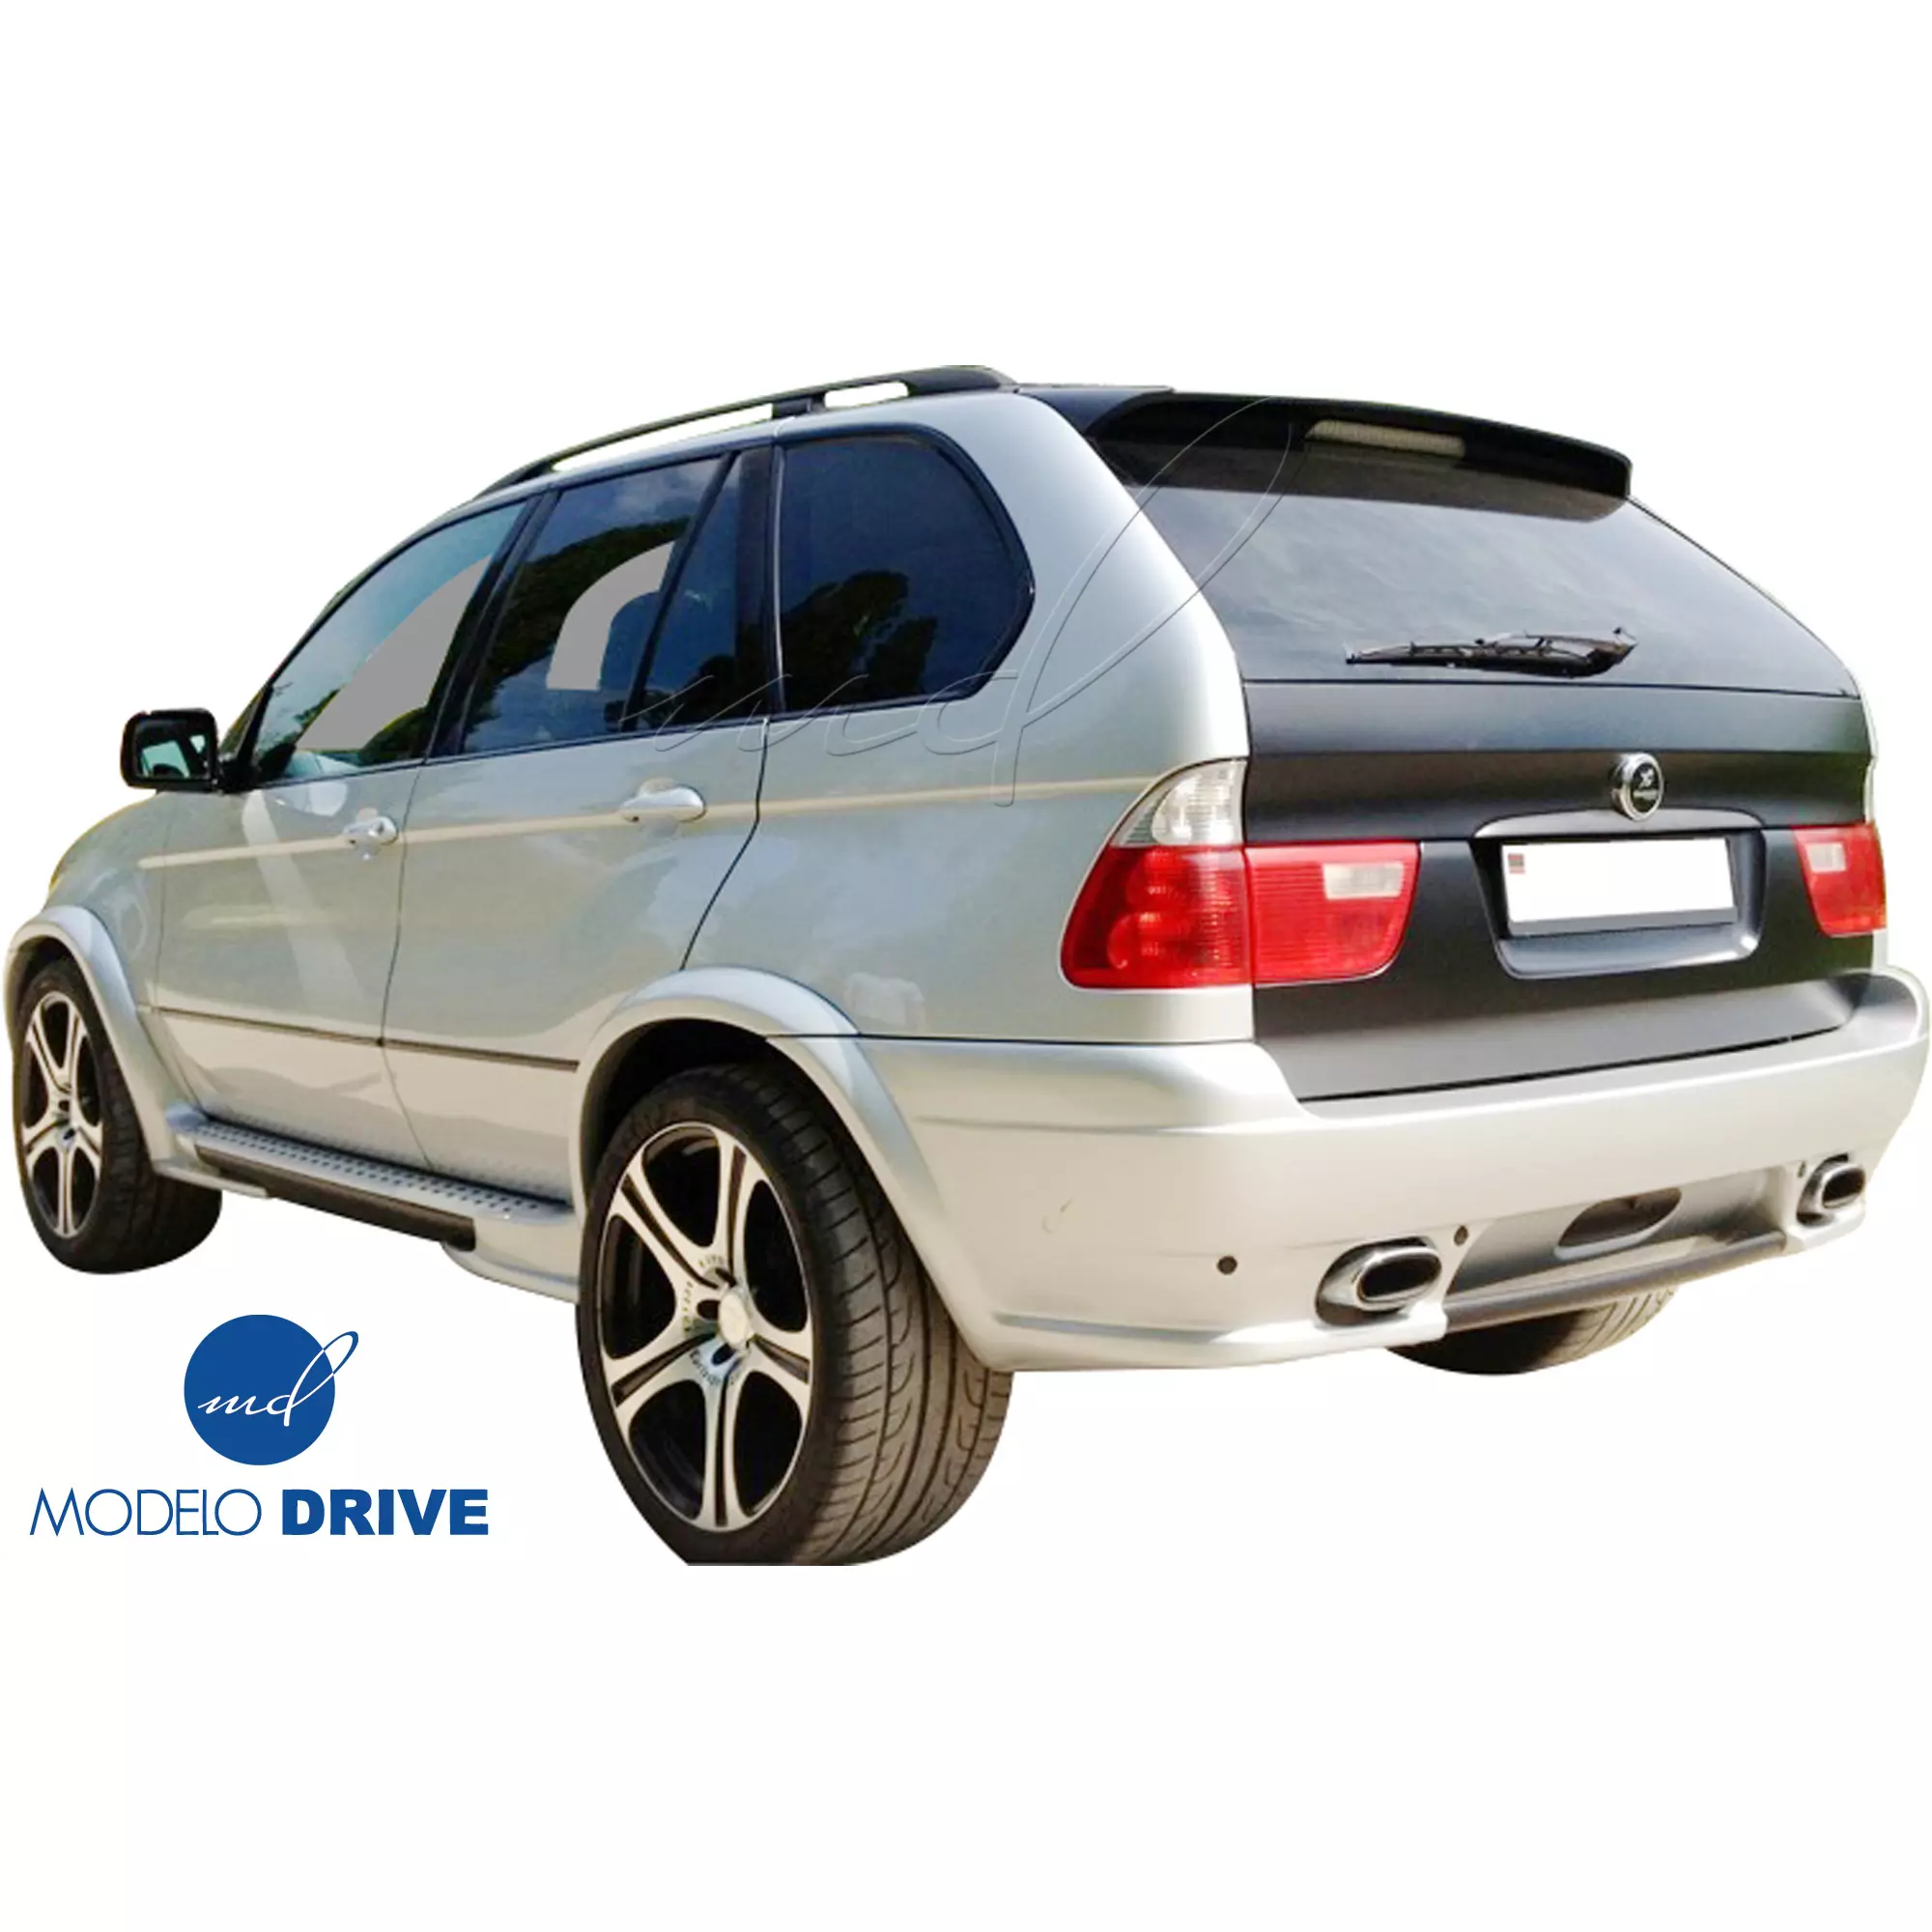 ModeloDrive FRP HAMA Body Kit 3pc > BMW X5 E53 2000-2006 > 5dr - Image 12